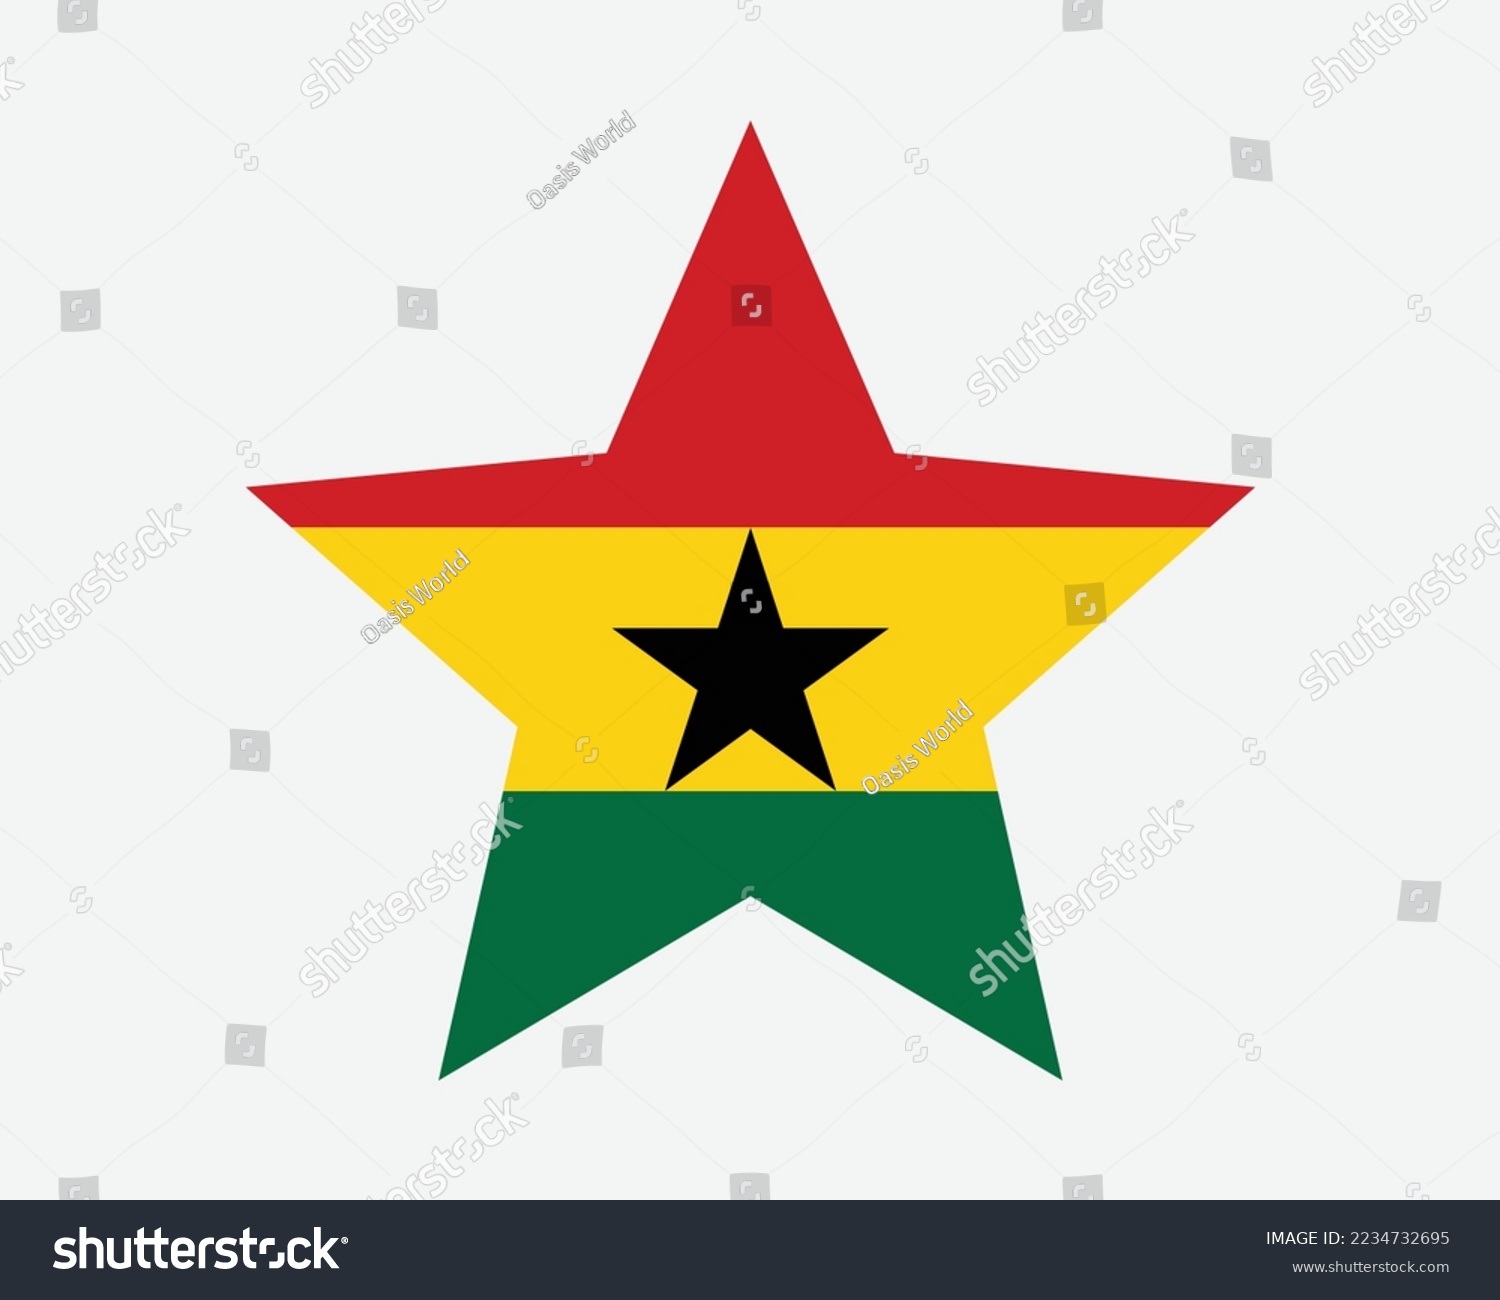 SVG of Ghana Star Flag. Ghanaian Star Shape Flag. Republic of Ghana Country National Banner Icon Symbol Vector Flat Artwork Graphic Illustration svg